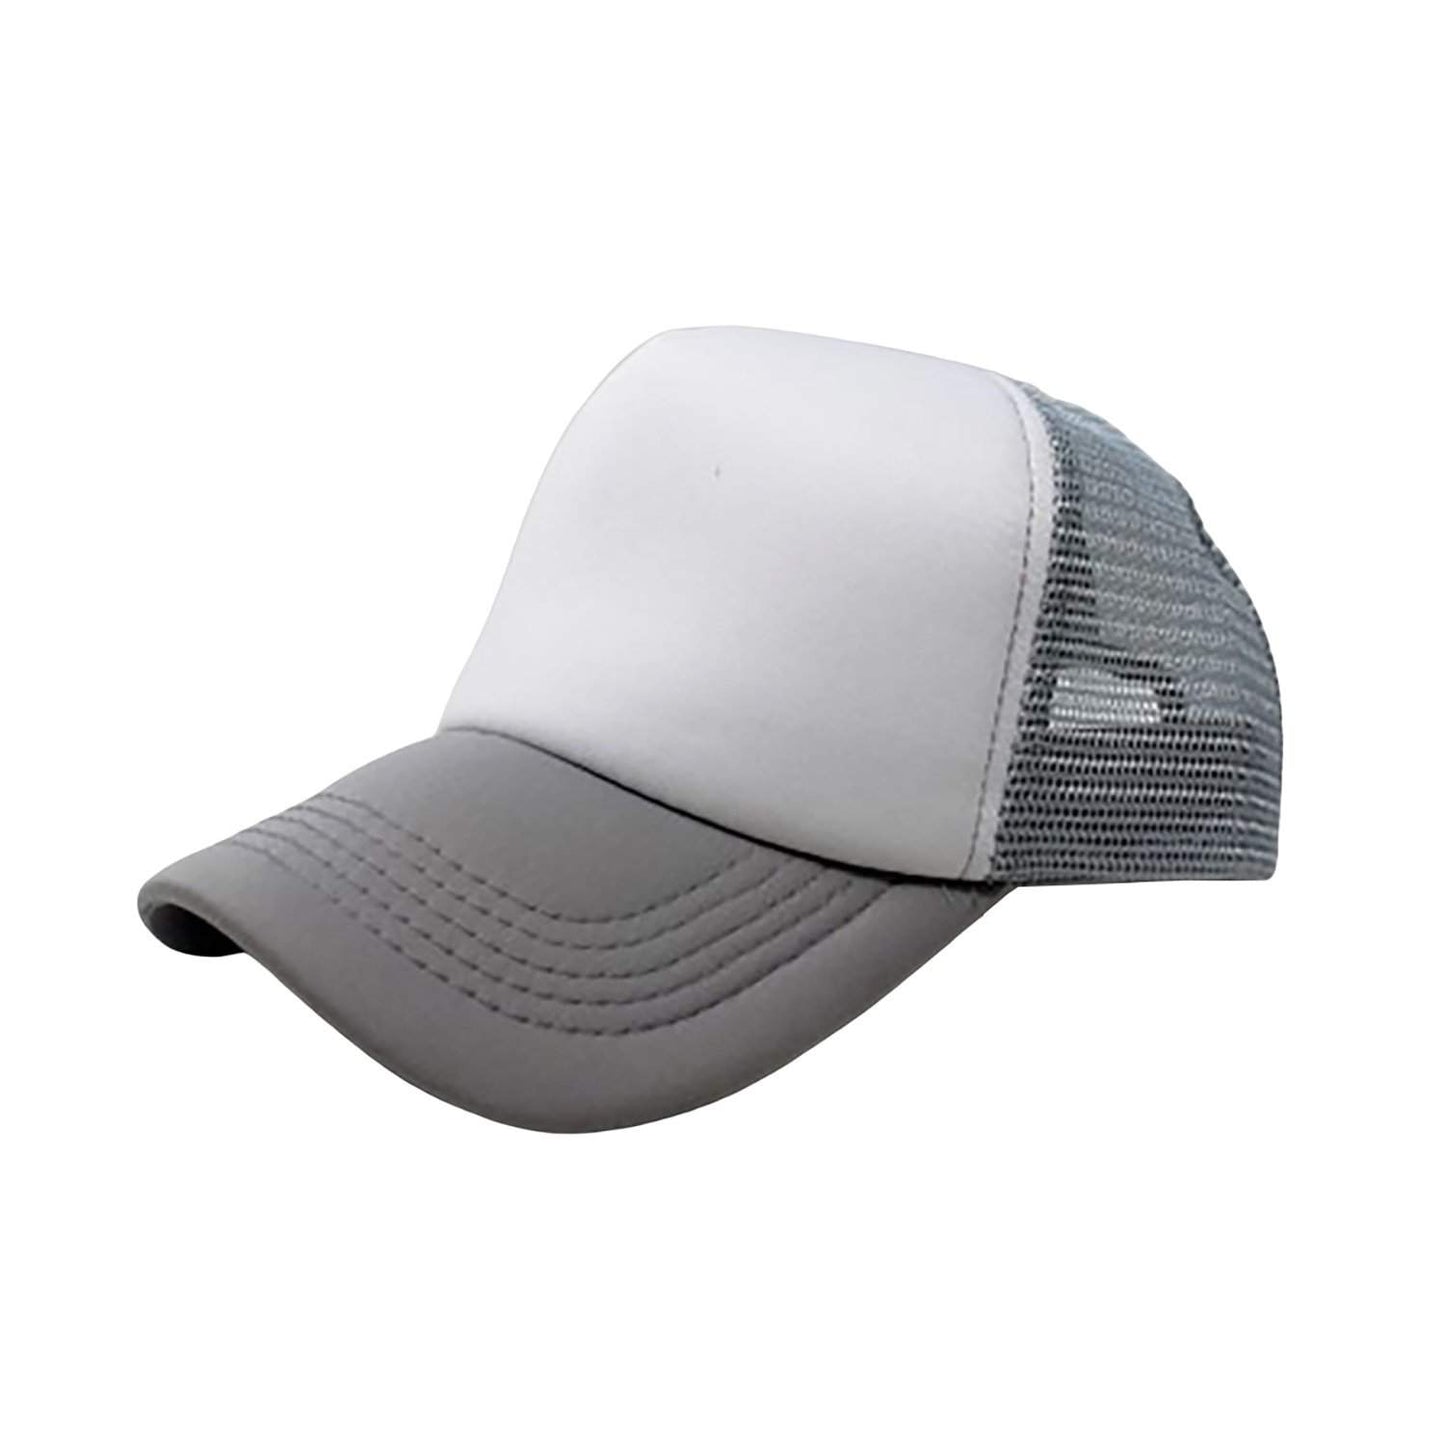 Qraftsy Trucker Hat Adjustable Cap